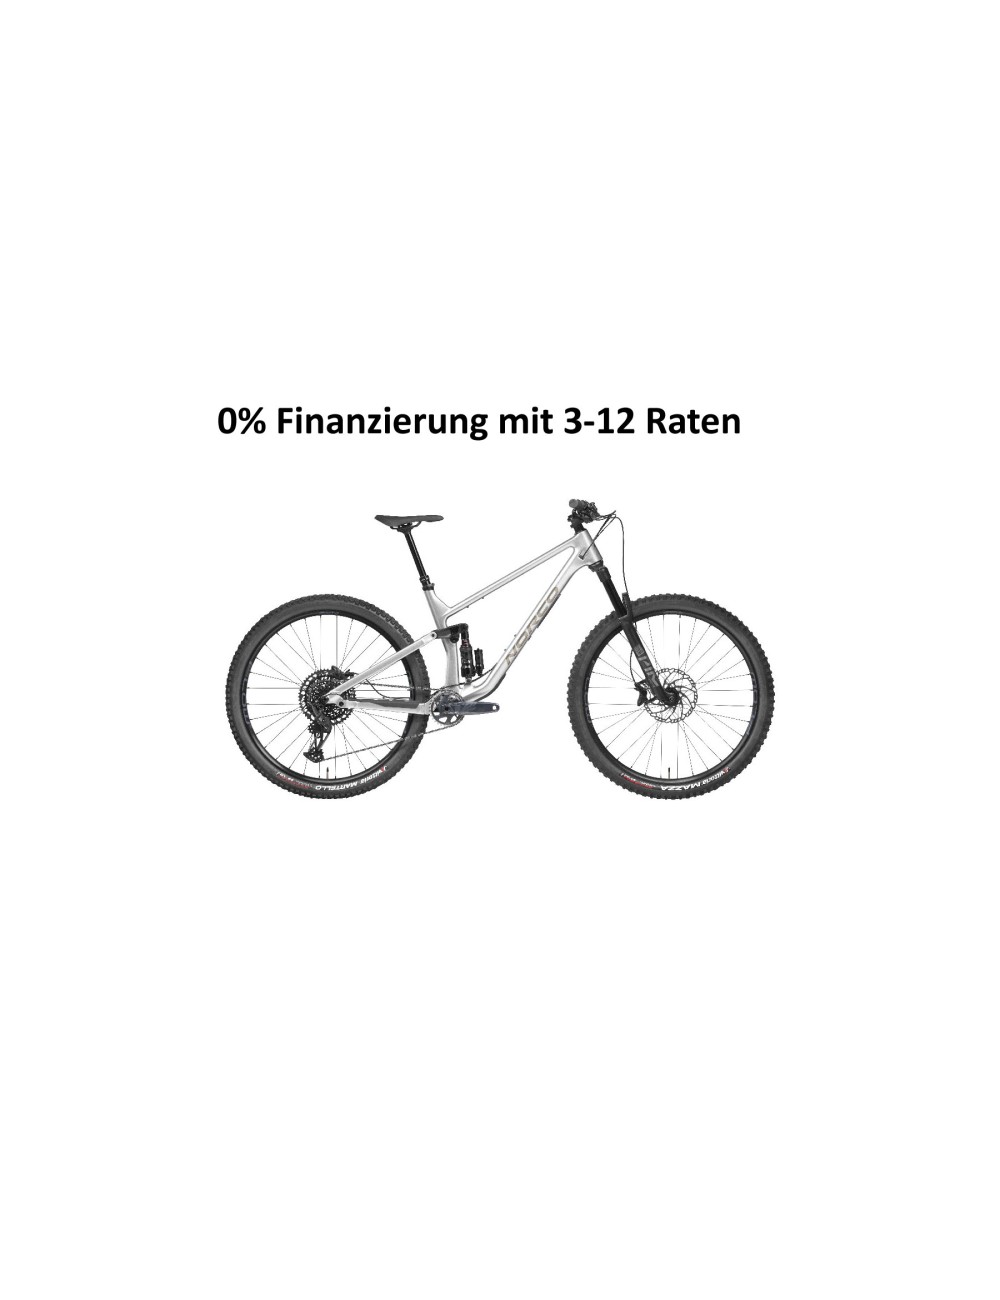 Norco Optic C9.2 Bike - Silver/Chrome